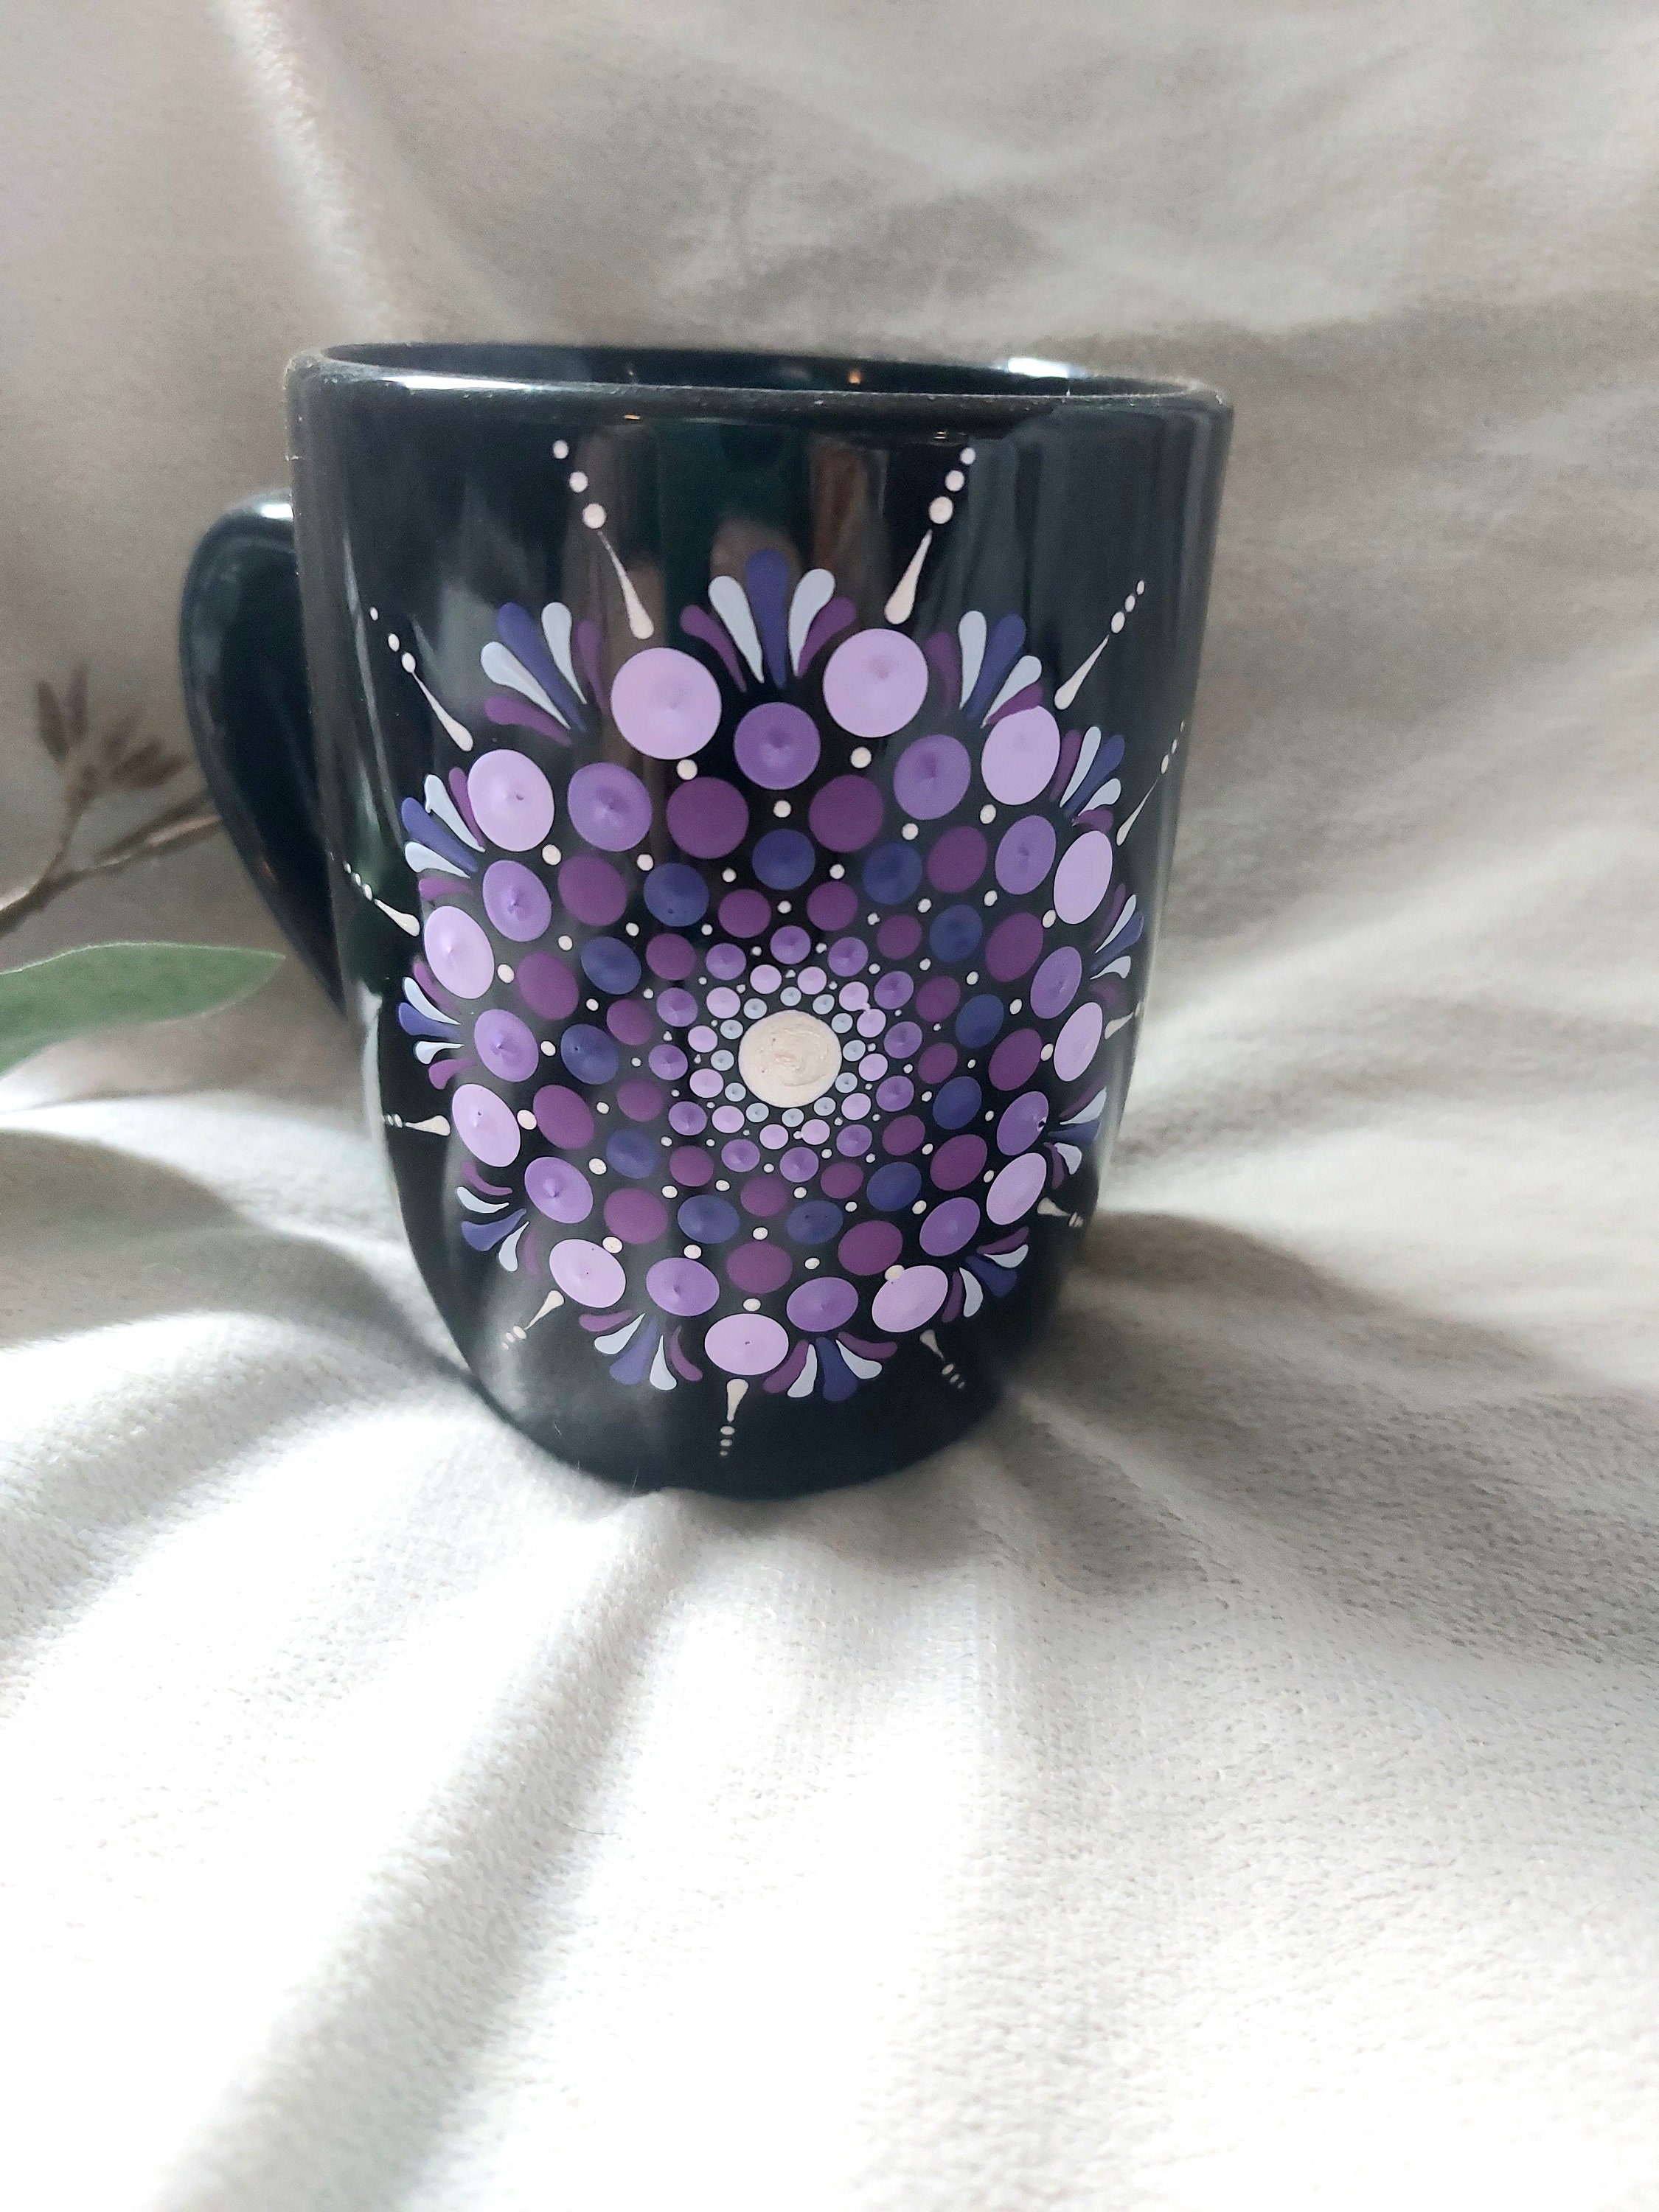 Tasse infuseur à thé Mandala violet